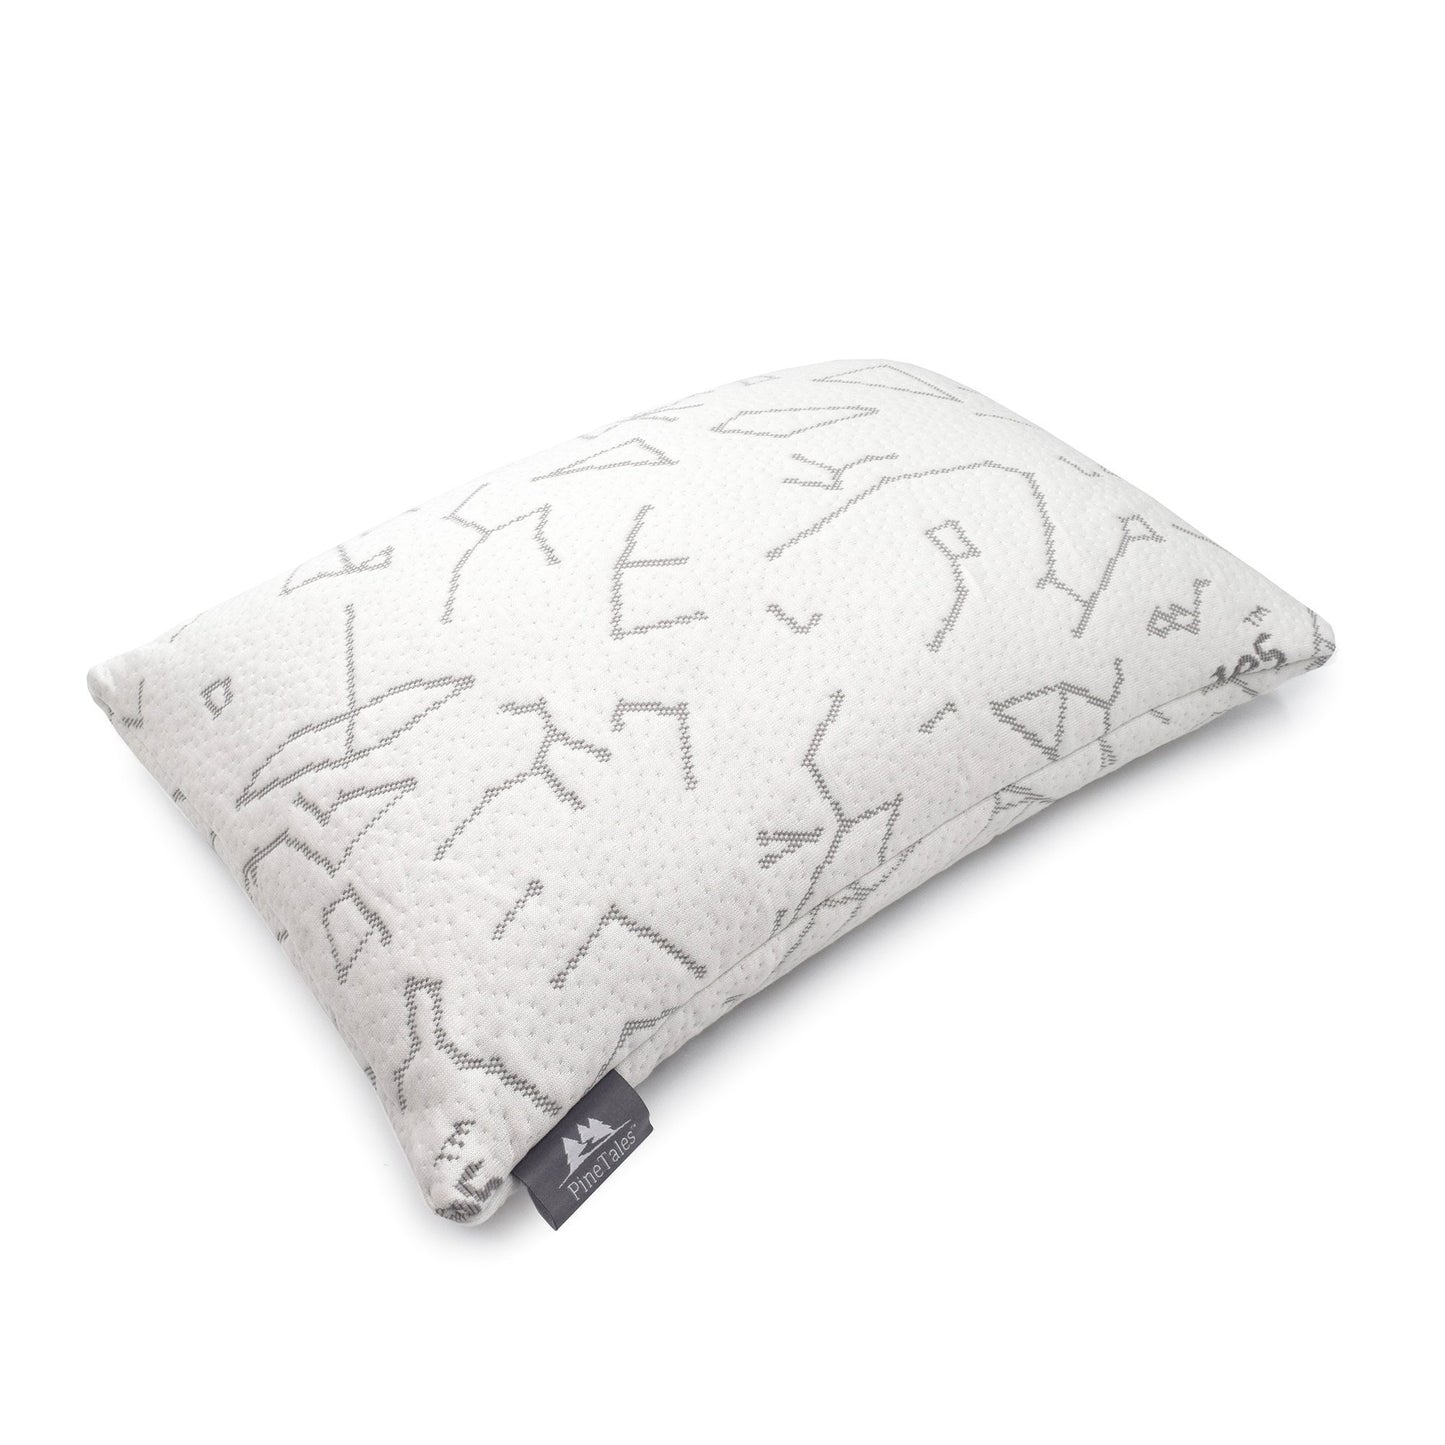 Hemp Pillow - PineTales - Star Constellation Design